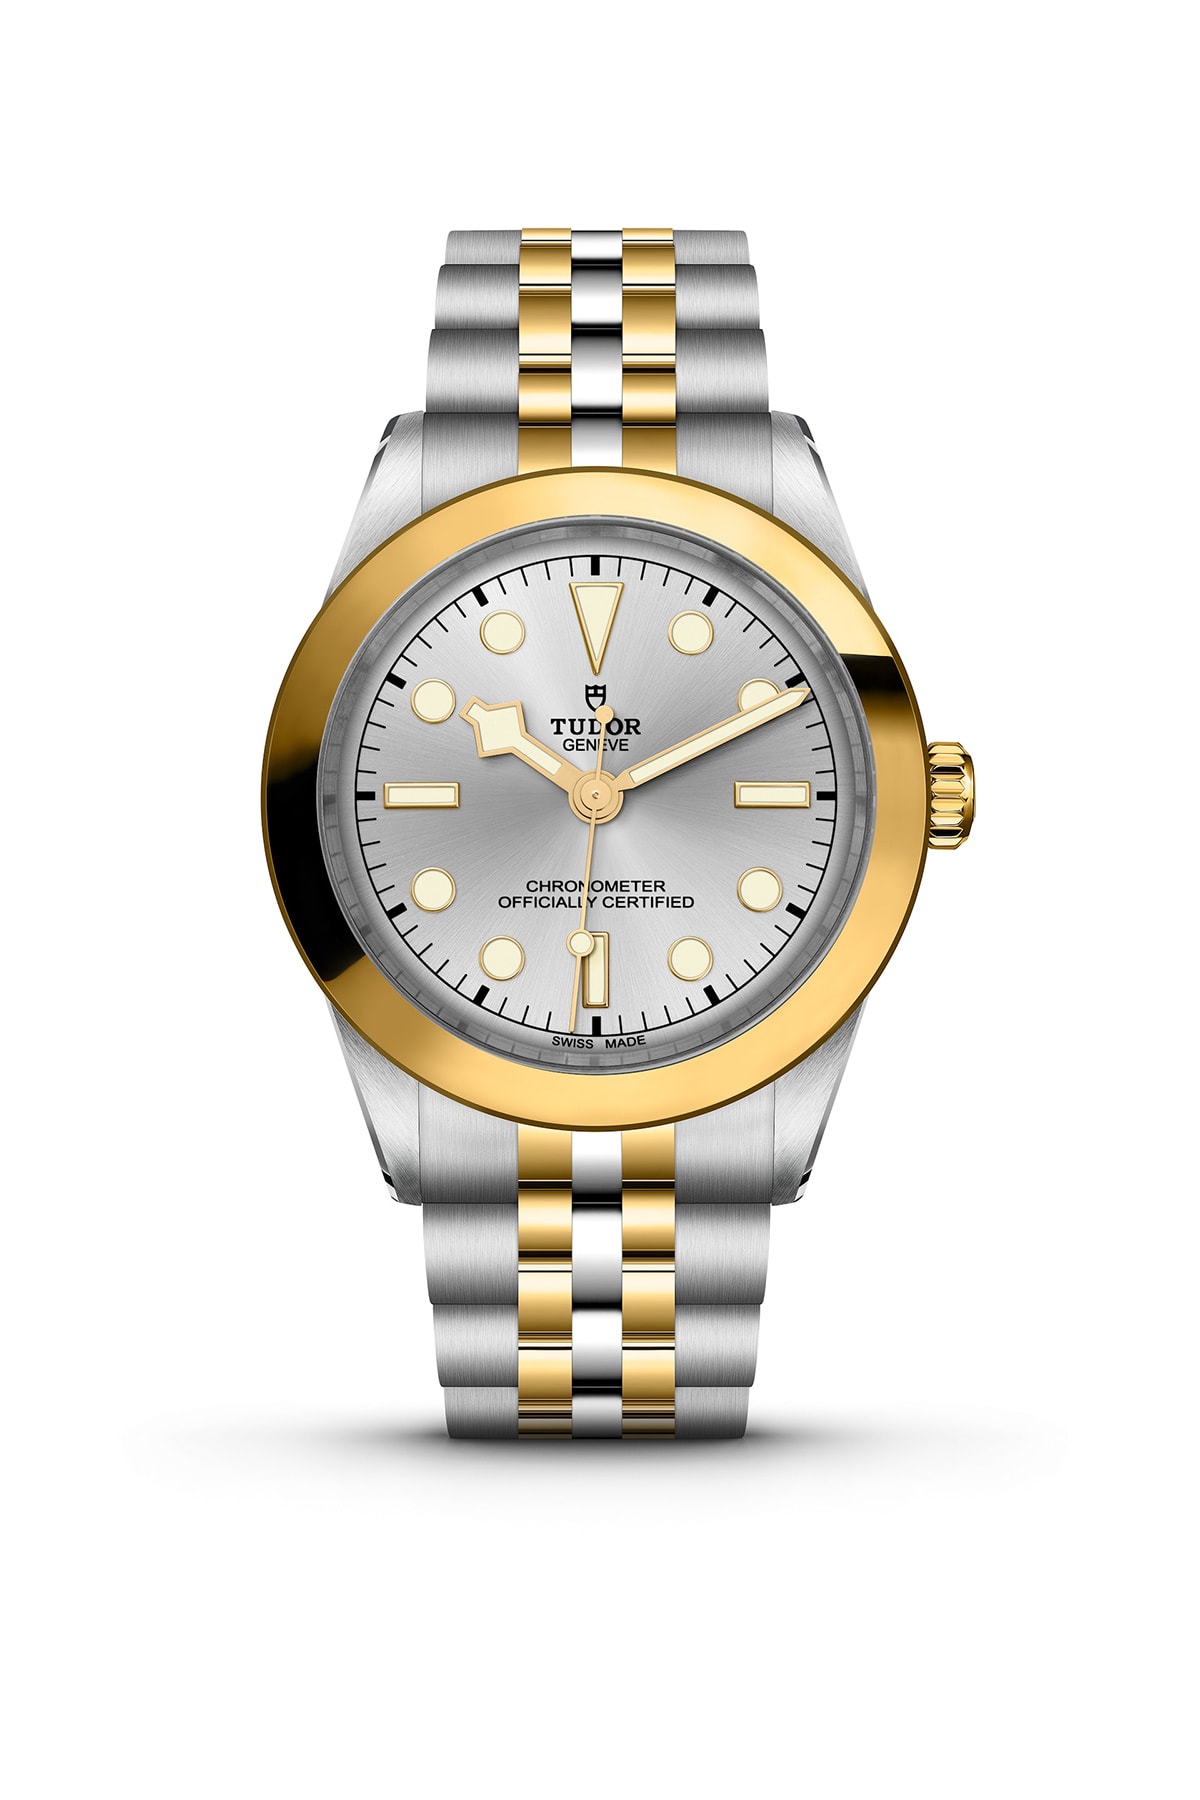 Tudor 2022 年全新錶款陣容正式登場